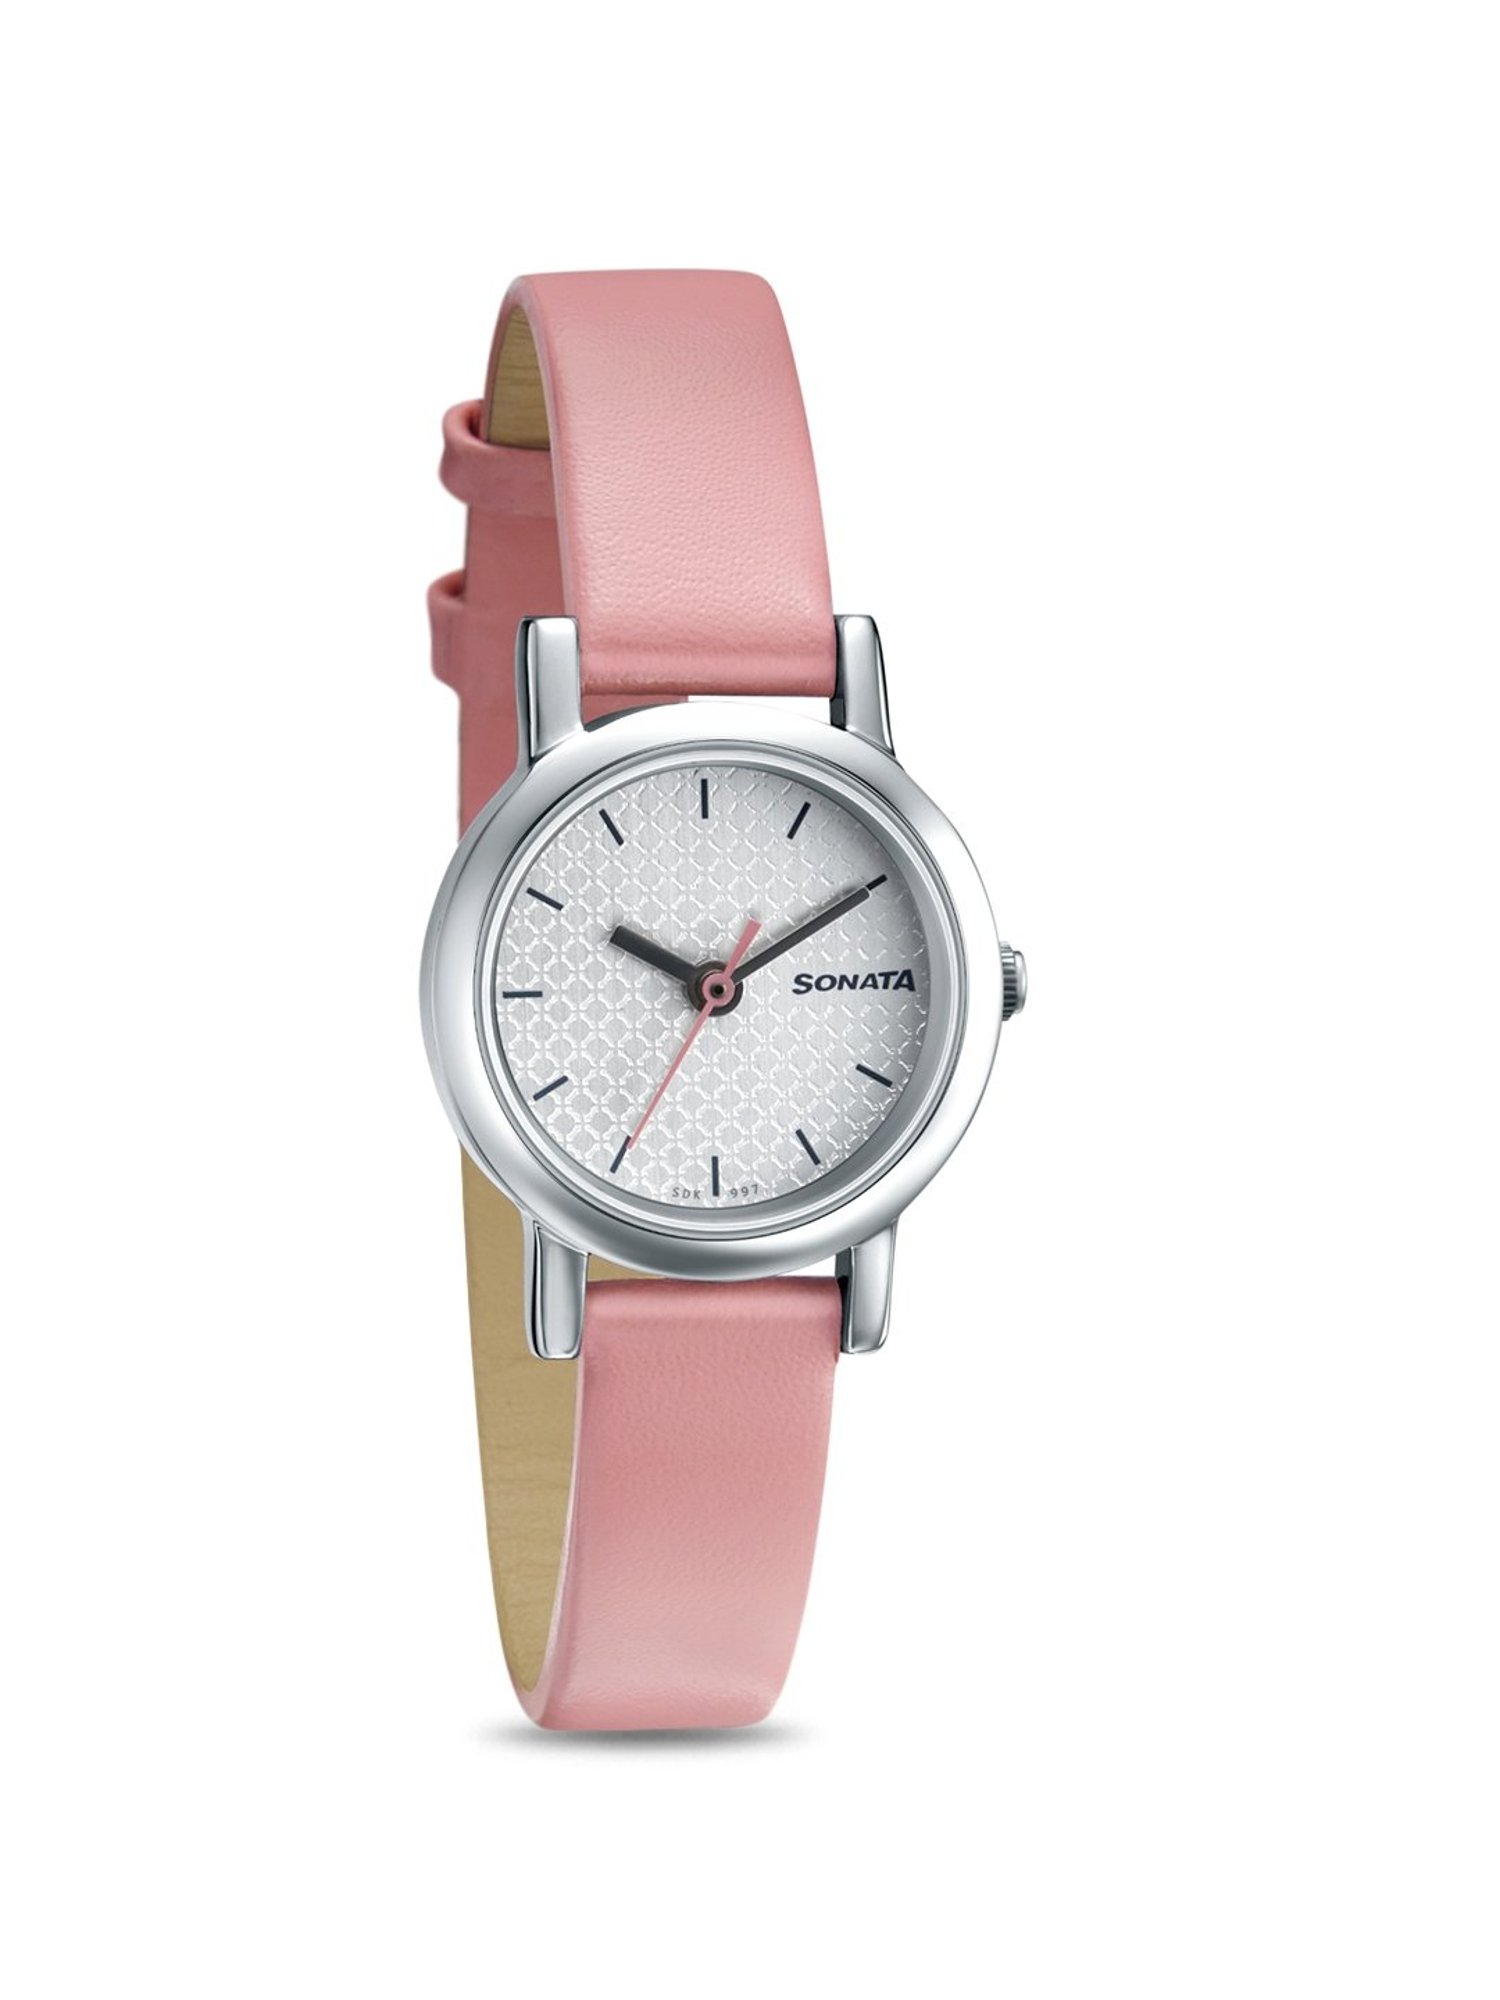 Buy Sonata 76sl15 Splash 2 0 Analog Watch For Women Online At Best Prices Tata Cliq